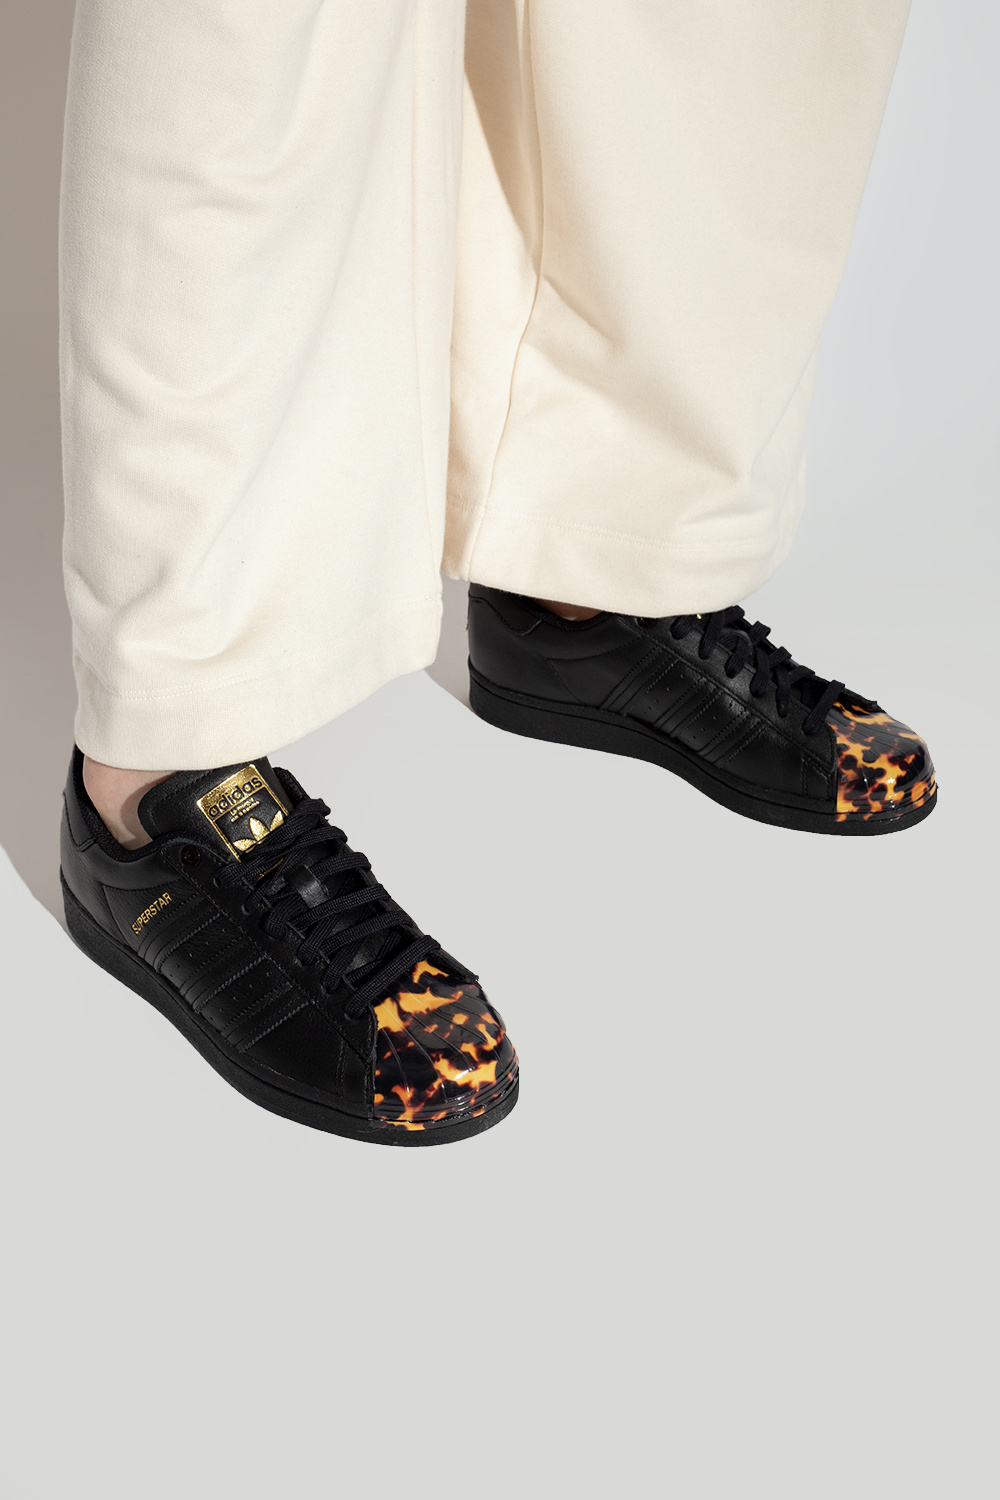 ADIDAS Originals ‘Superstar W’ sneakers